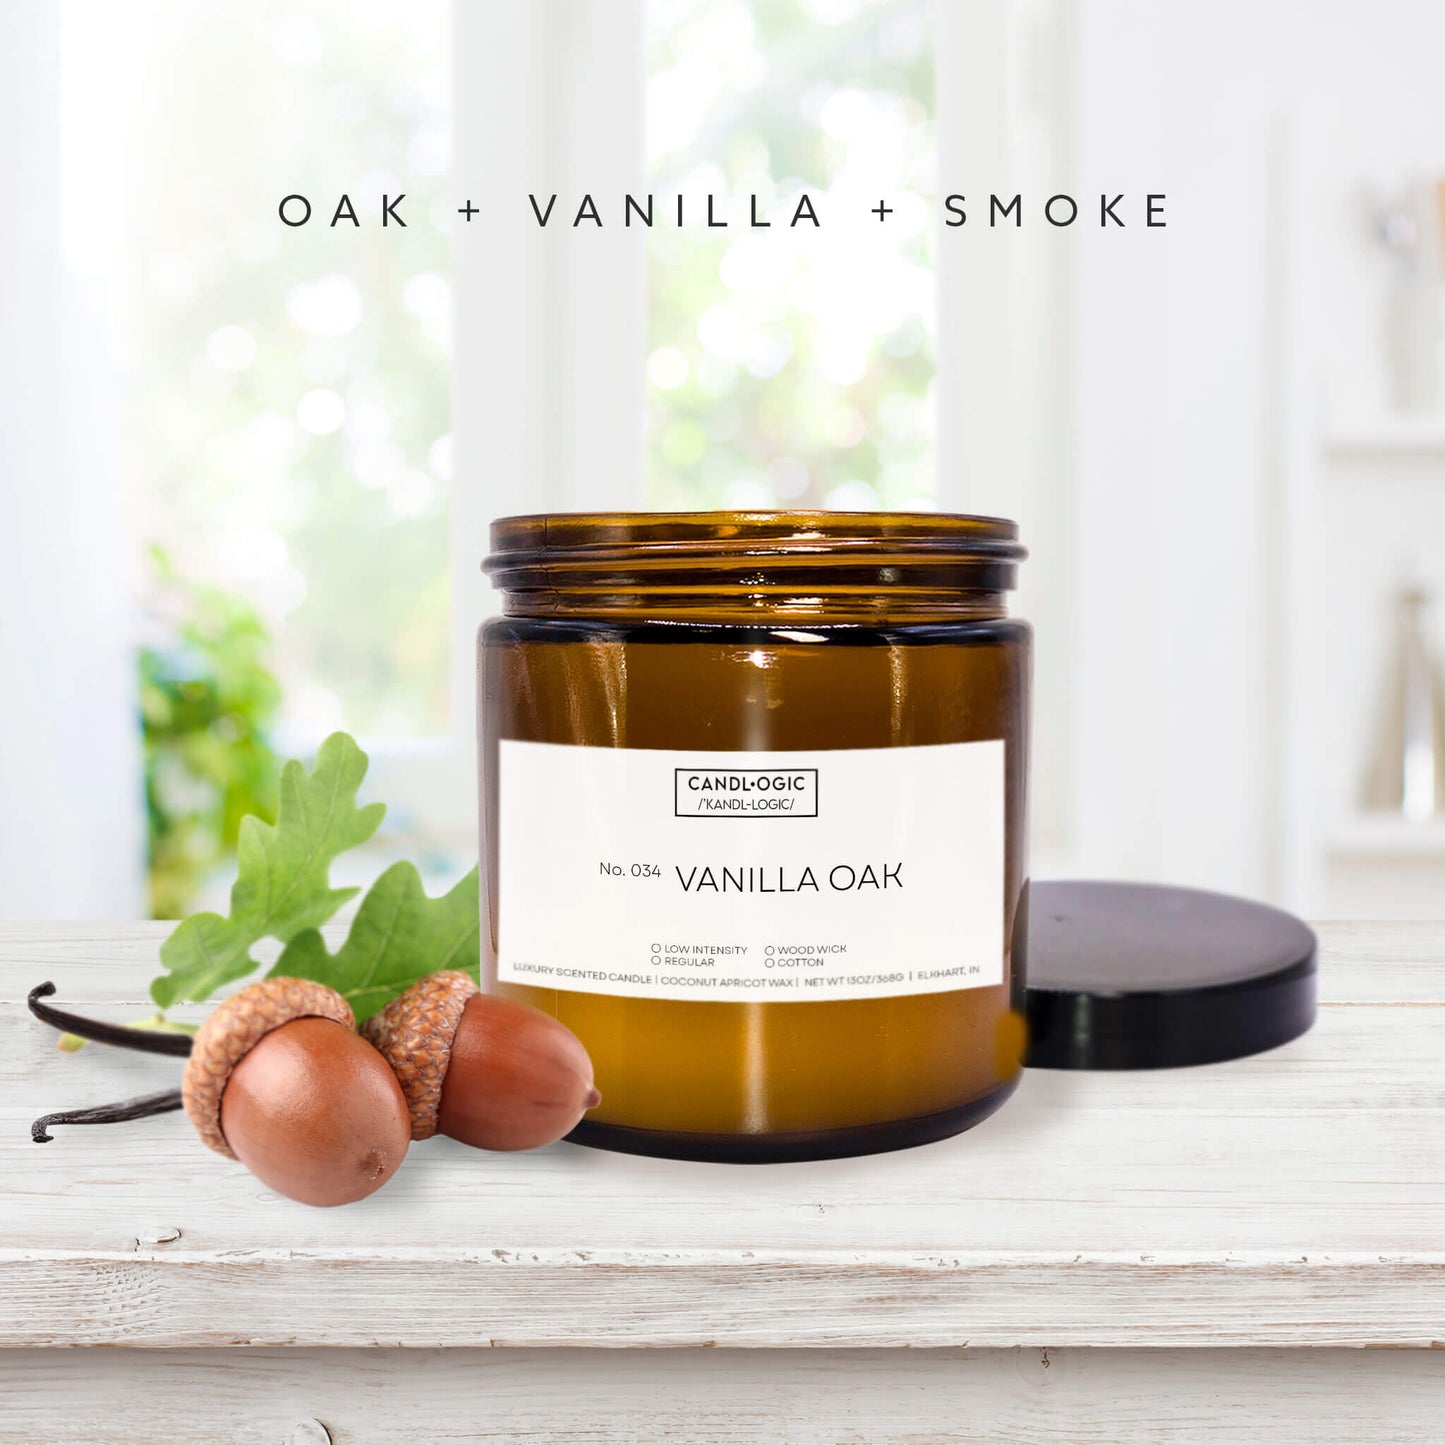 No. 034 Vanilla Oak candle - Oak, Vanilla & Smoke